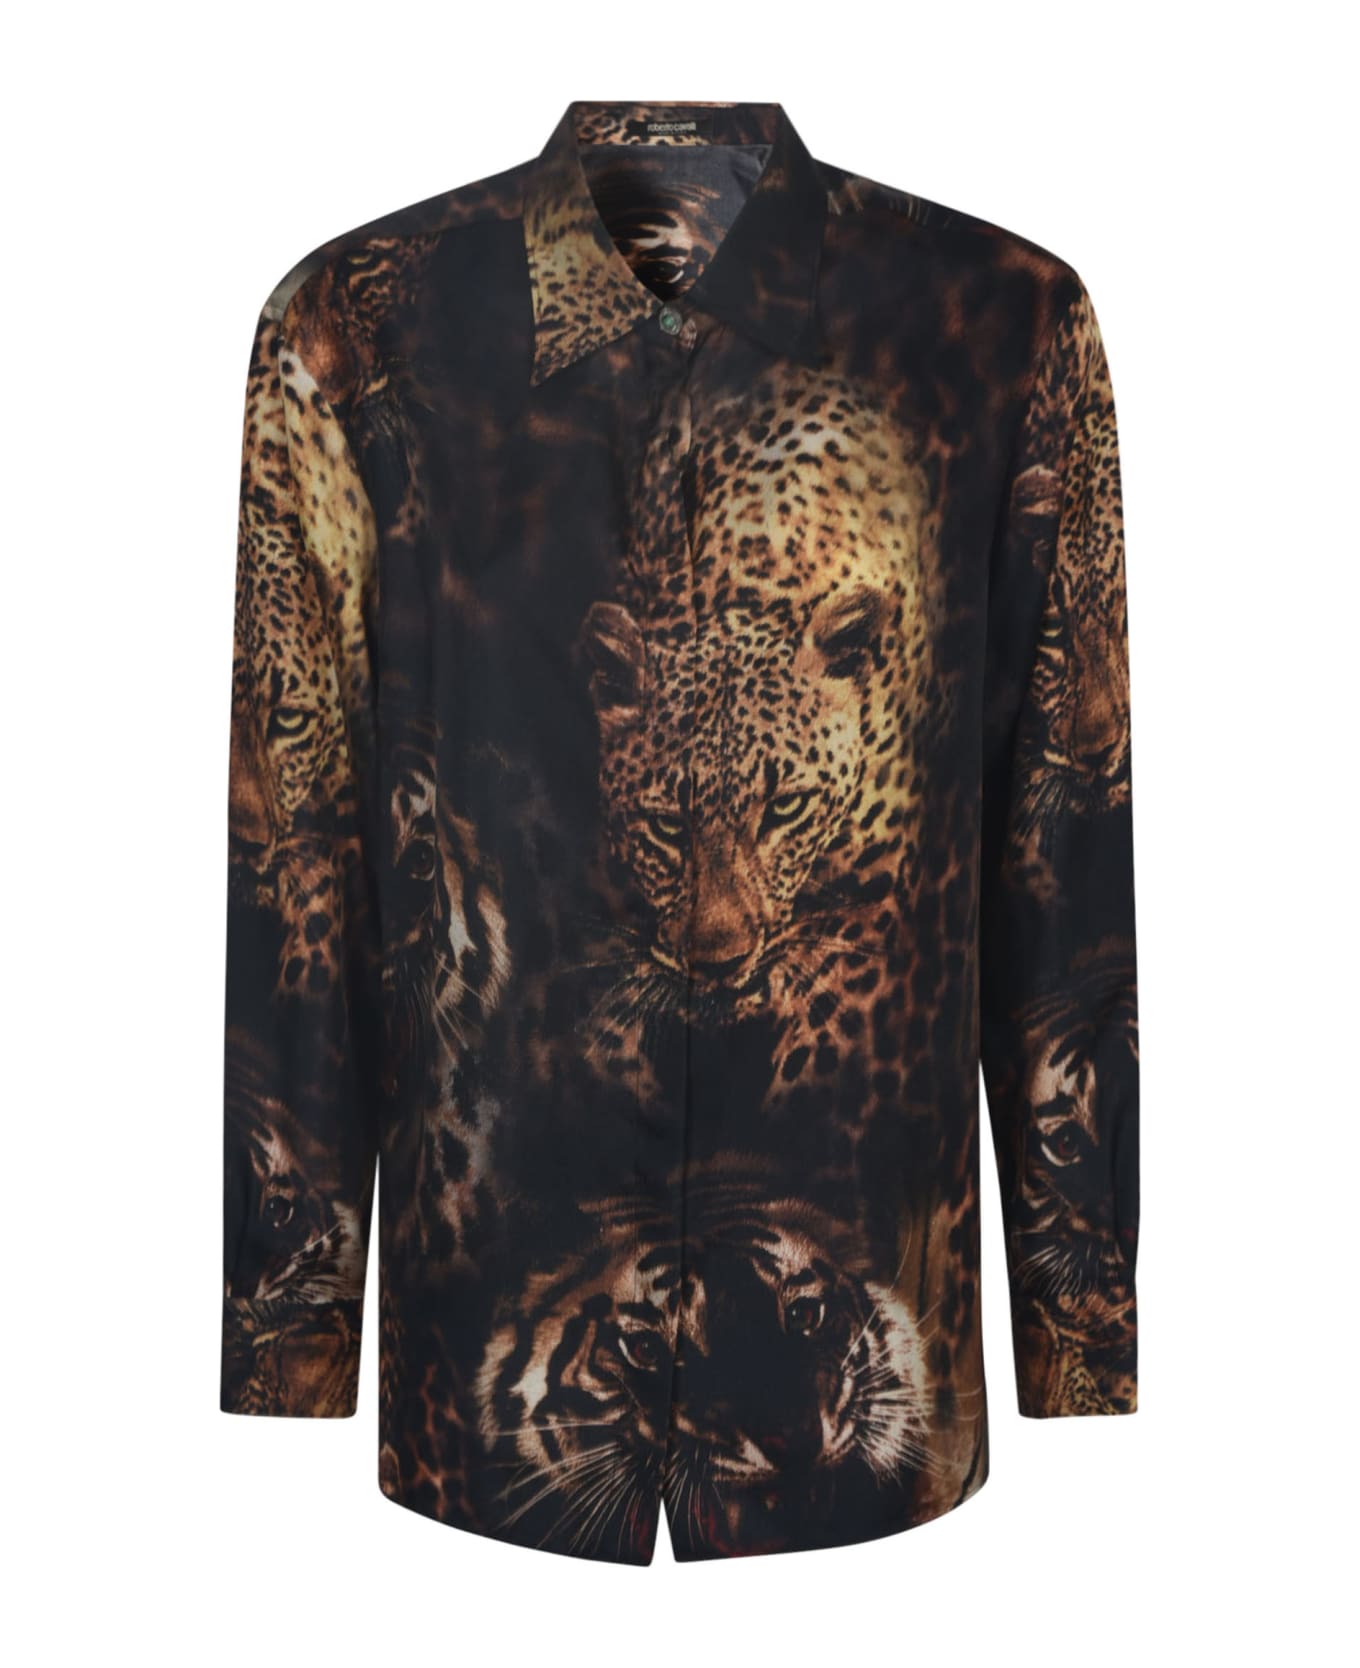 Roberto Cavalli Printed Tiger Shirt - Rust